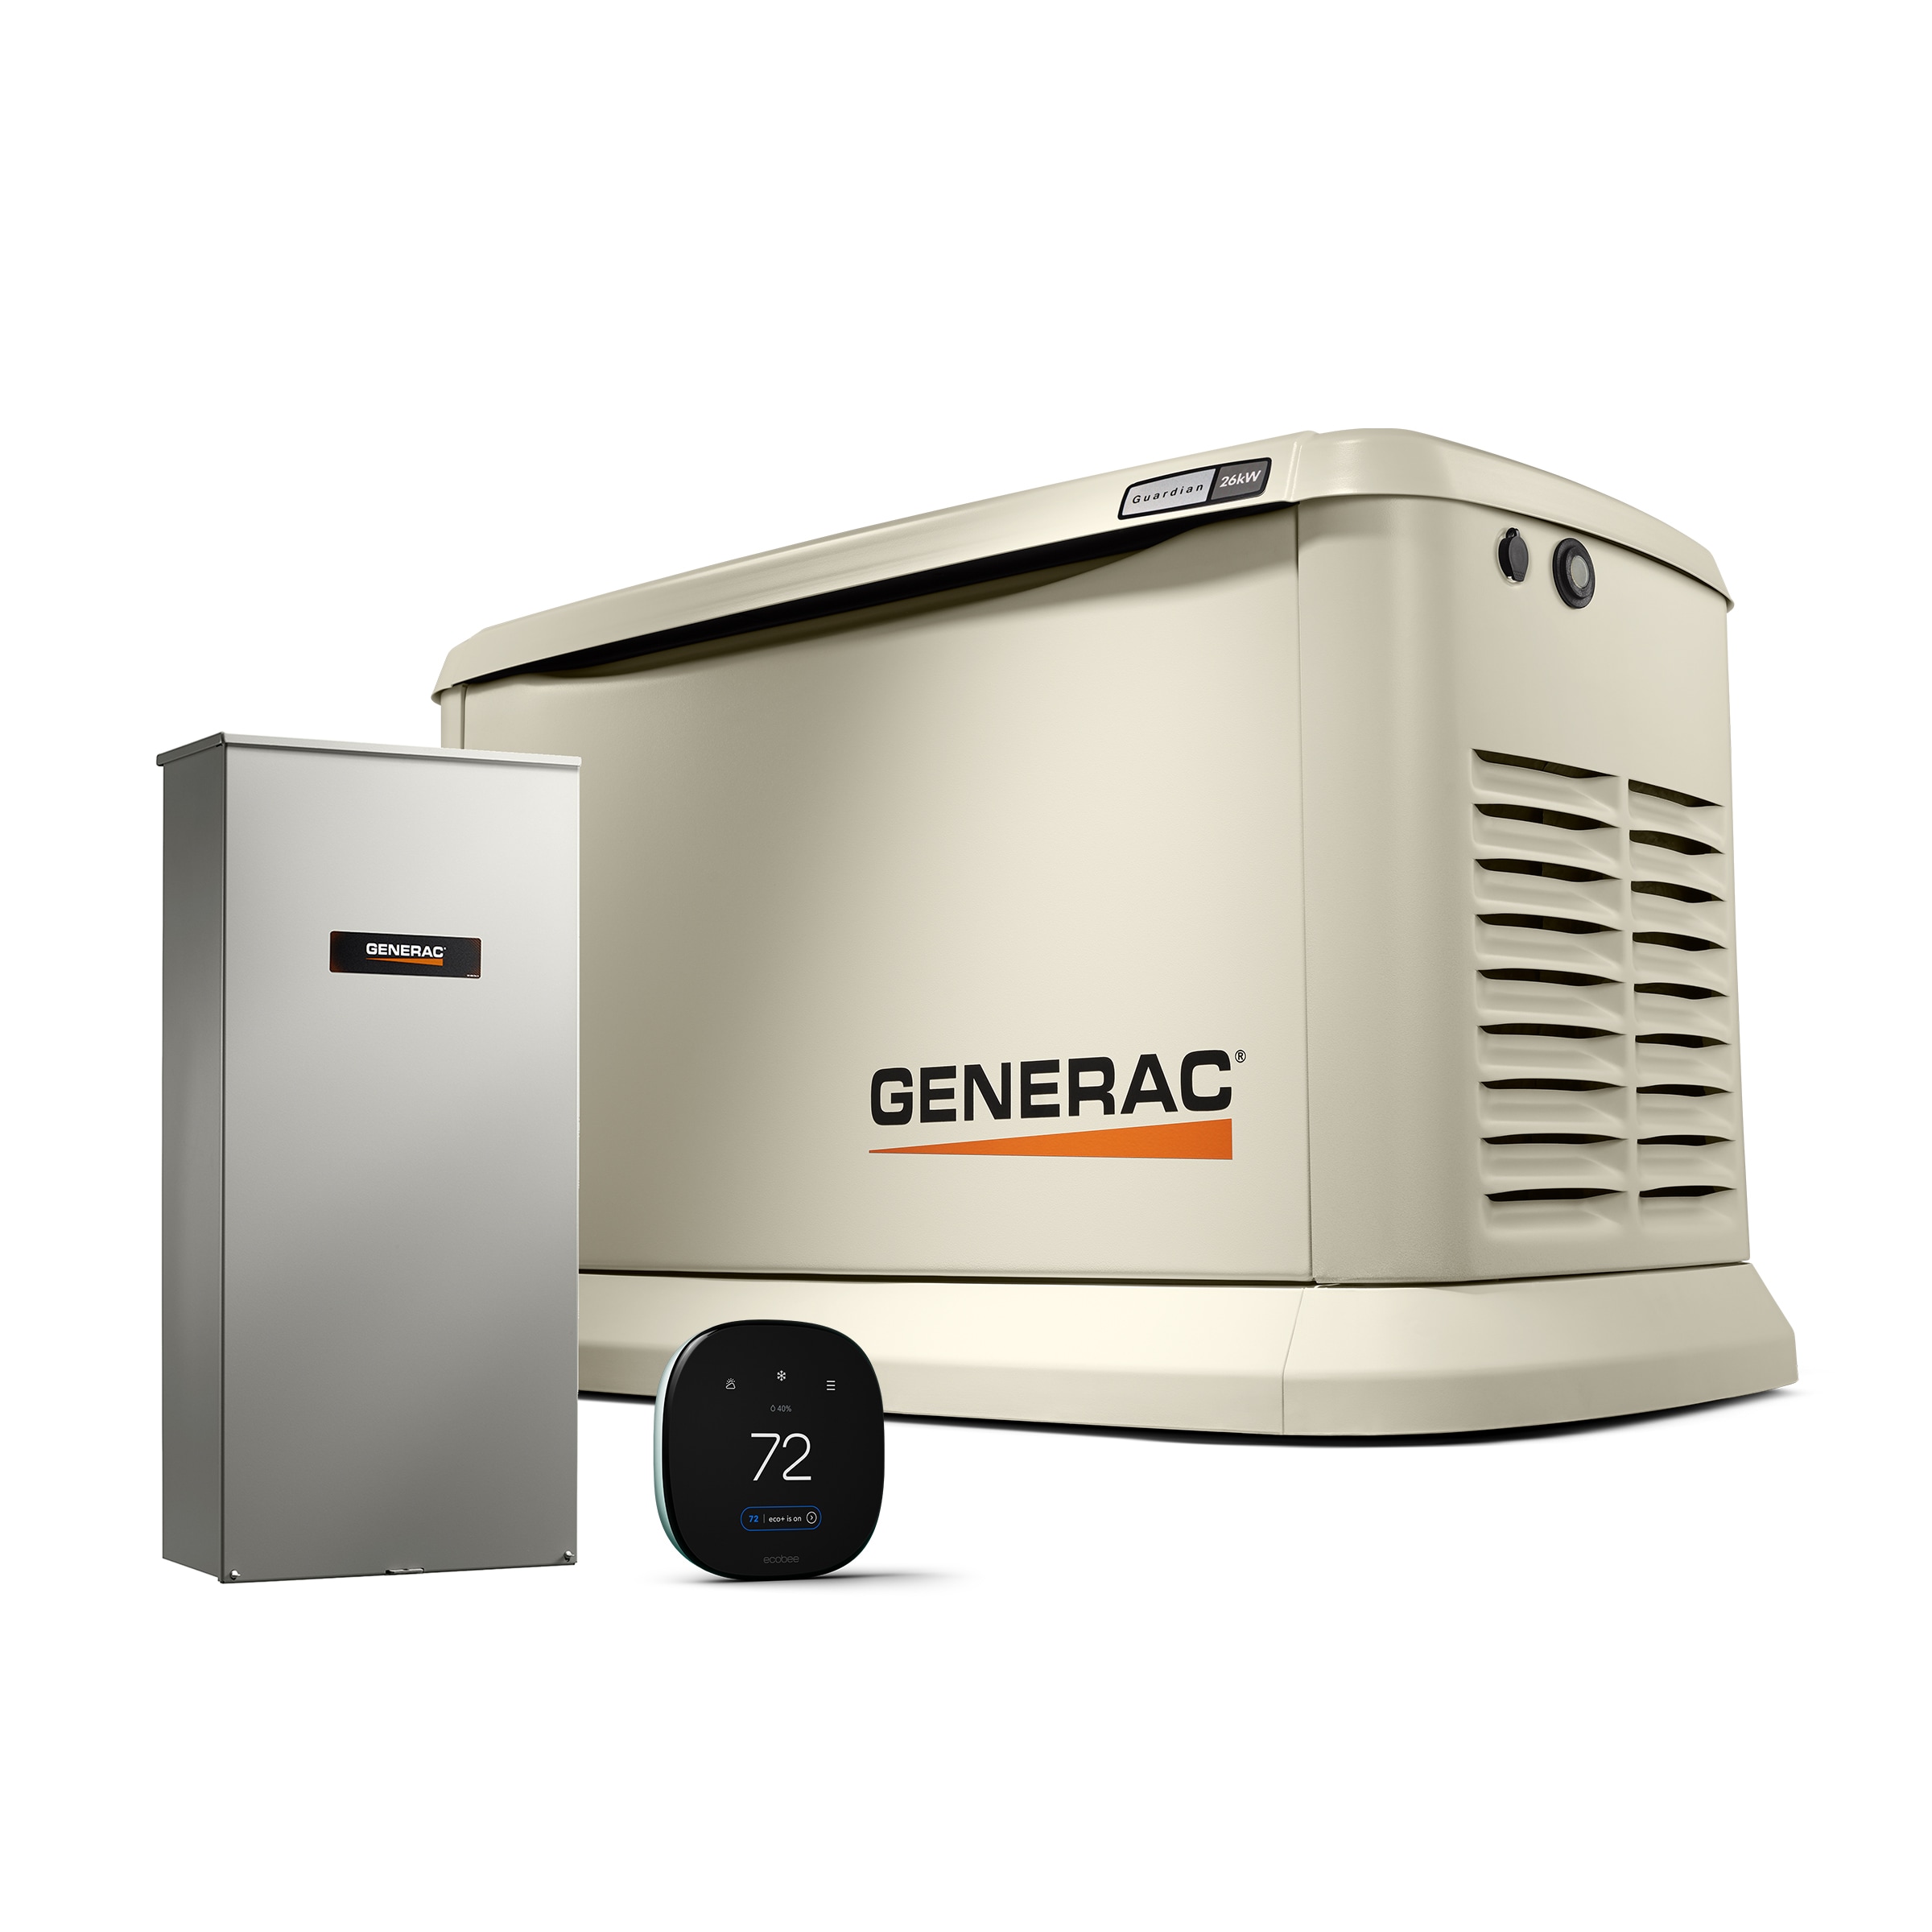 Generac 26kW Home Standby Generator + ecobee Smart Thermostat Enhanced Bundle